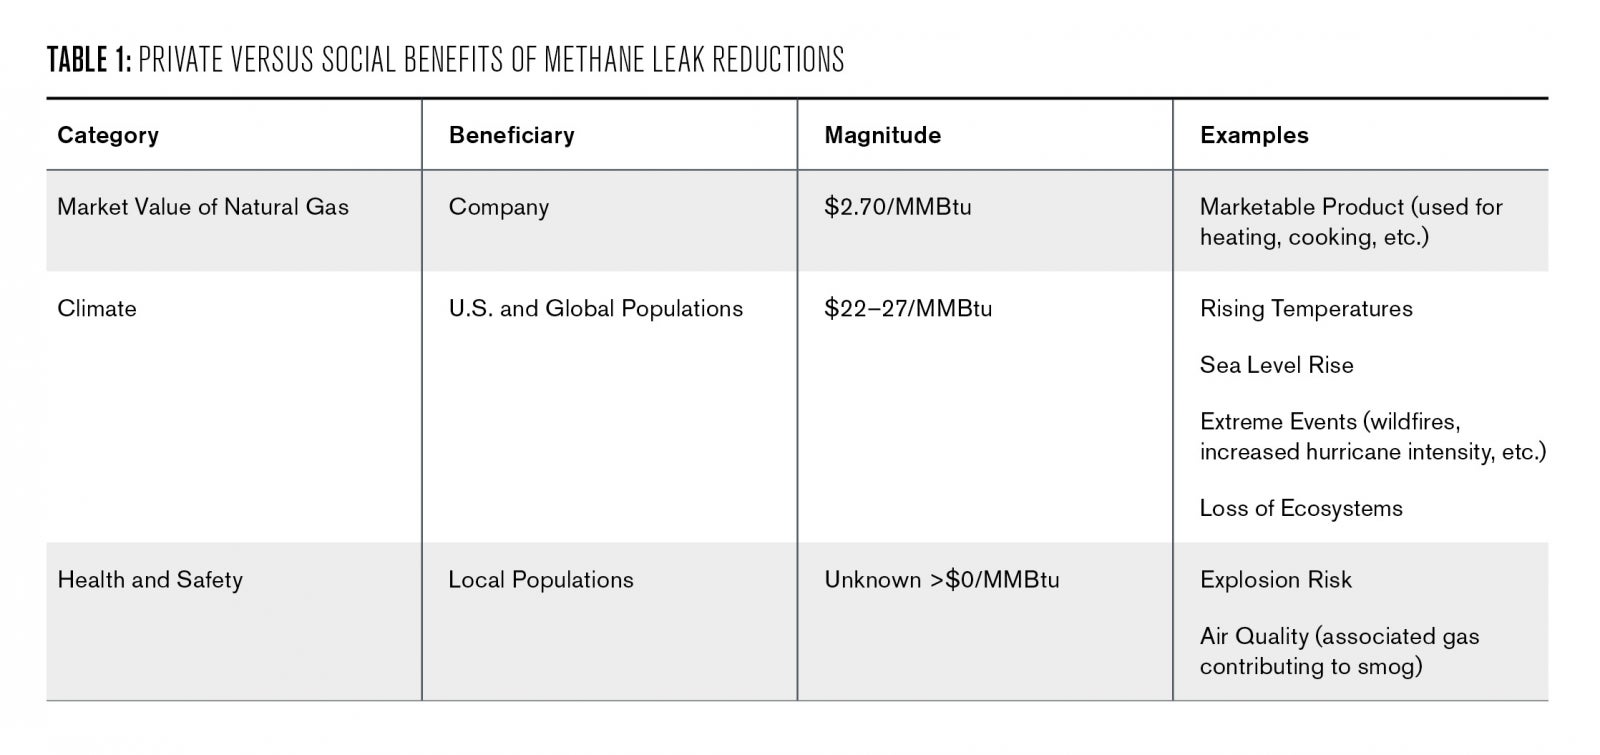 Table 1: Private versus social benefits of methane leak reductions